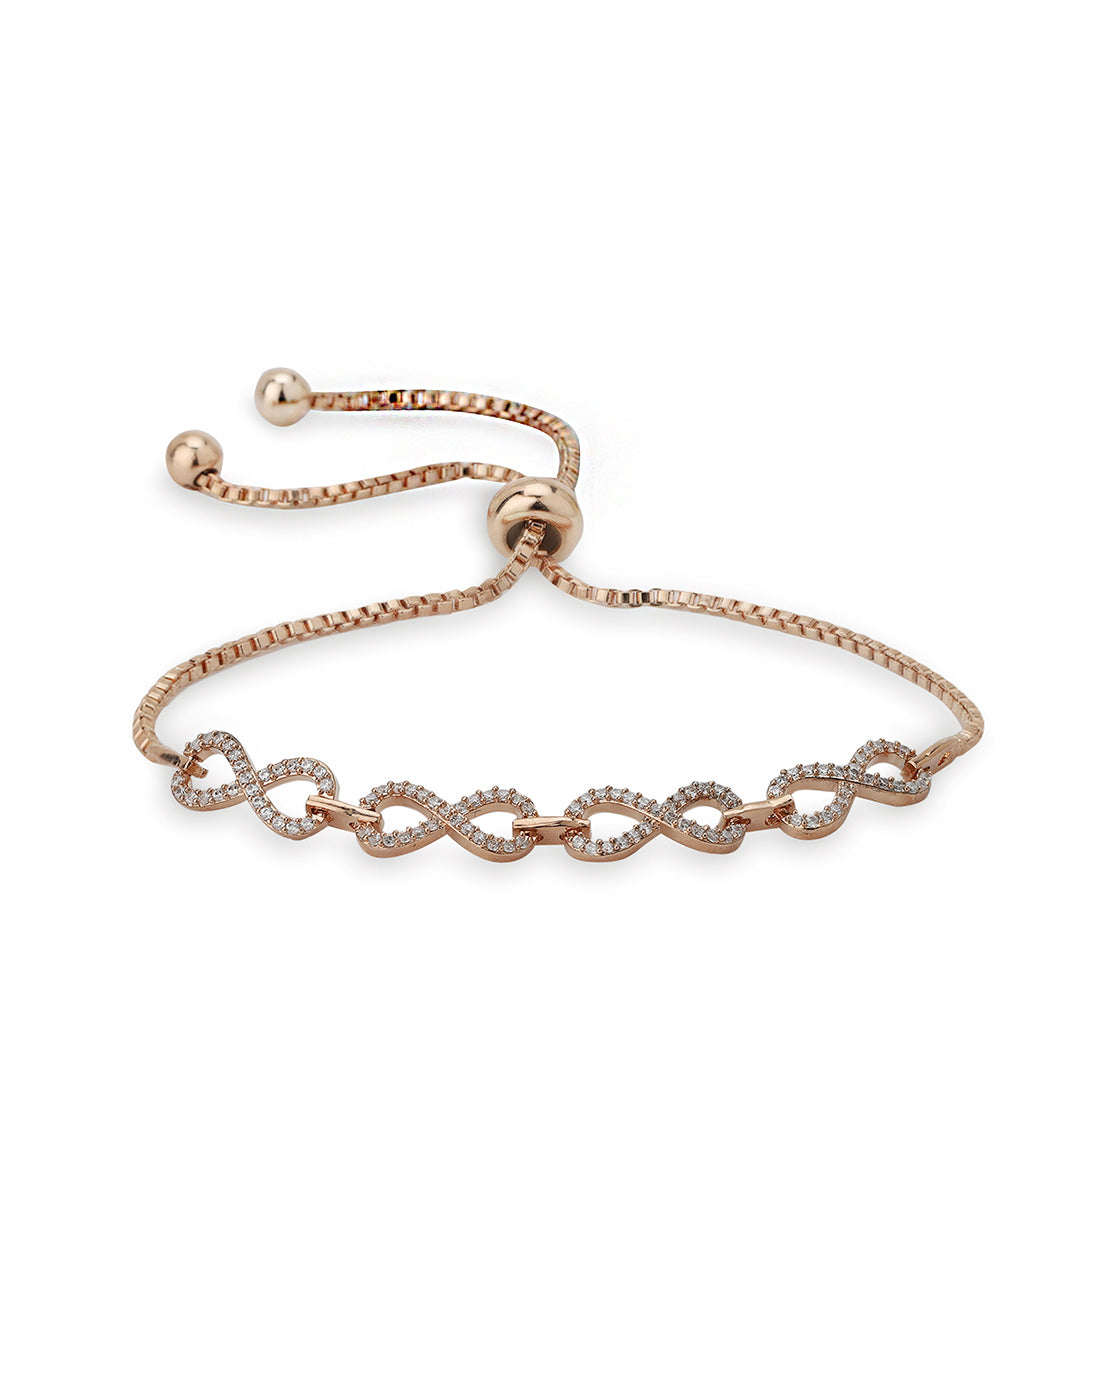 Carlton London Rose Gold Plated-Cz Studded Infinity Bracelet For Women